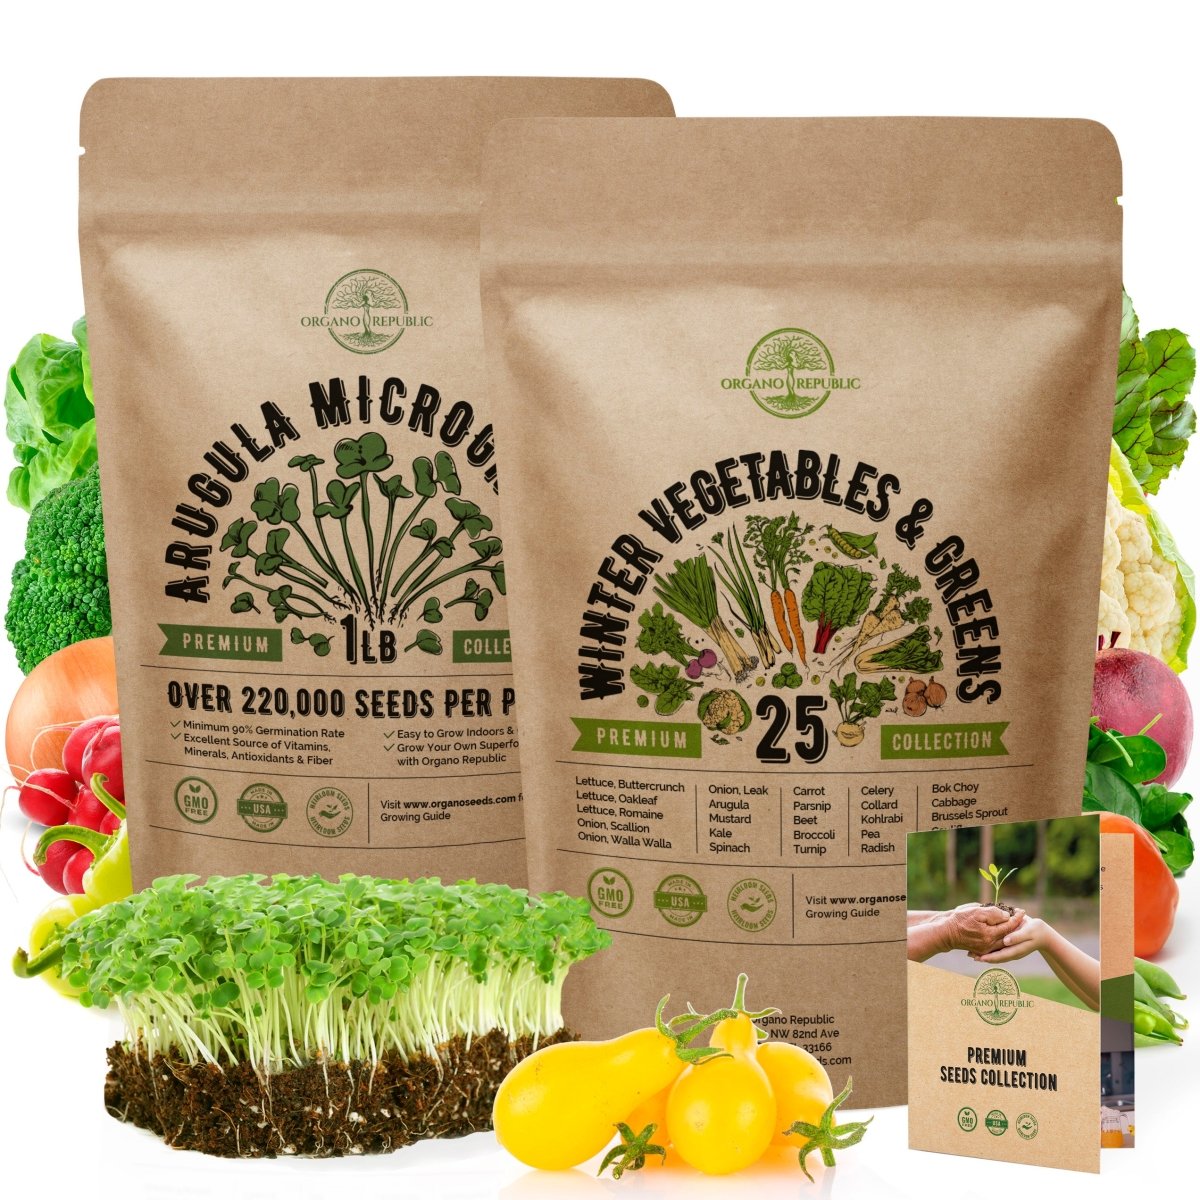 Arugula Microgreens & 25 Winter Vegetable Seeds Bundle Non-GMO Heirloom Seeds for Planting Indoor and Outdoor Over 226,000 Microgreen & Vegetables Seeds in One Value Bundle - Organo Republic